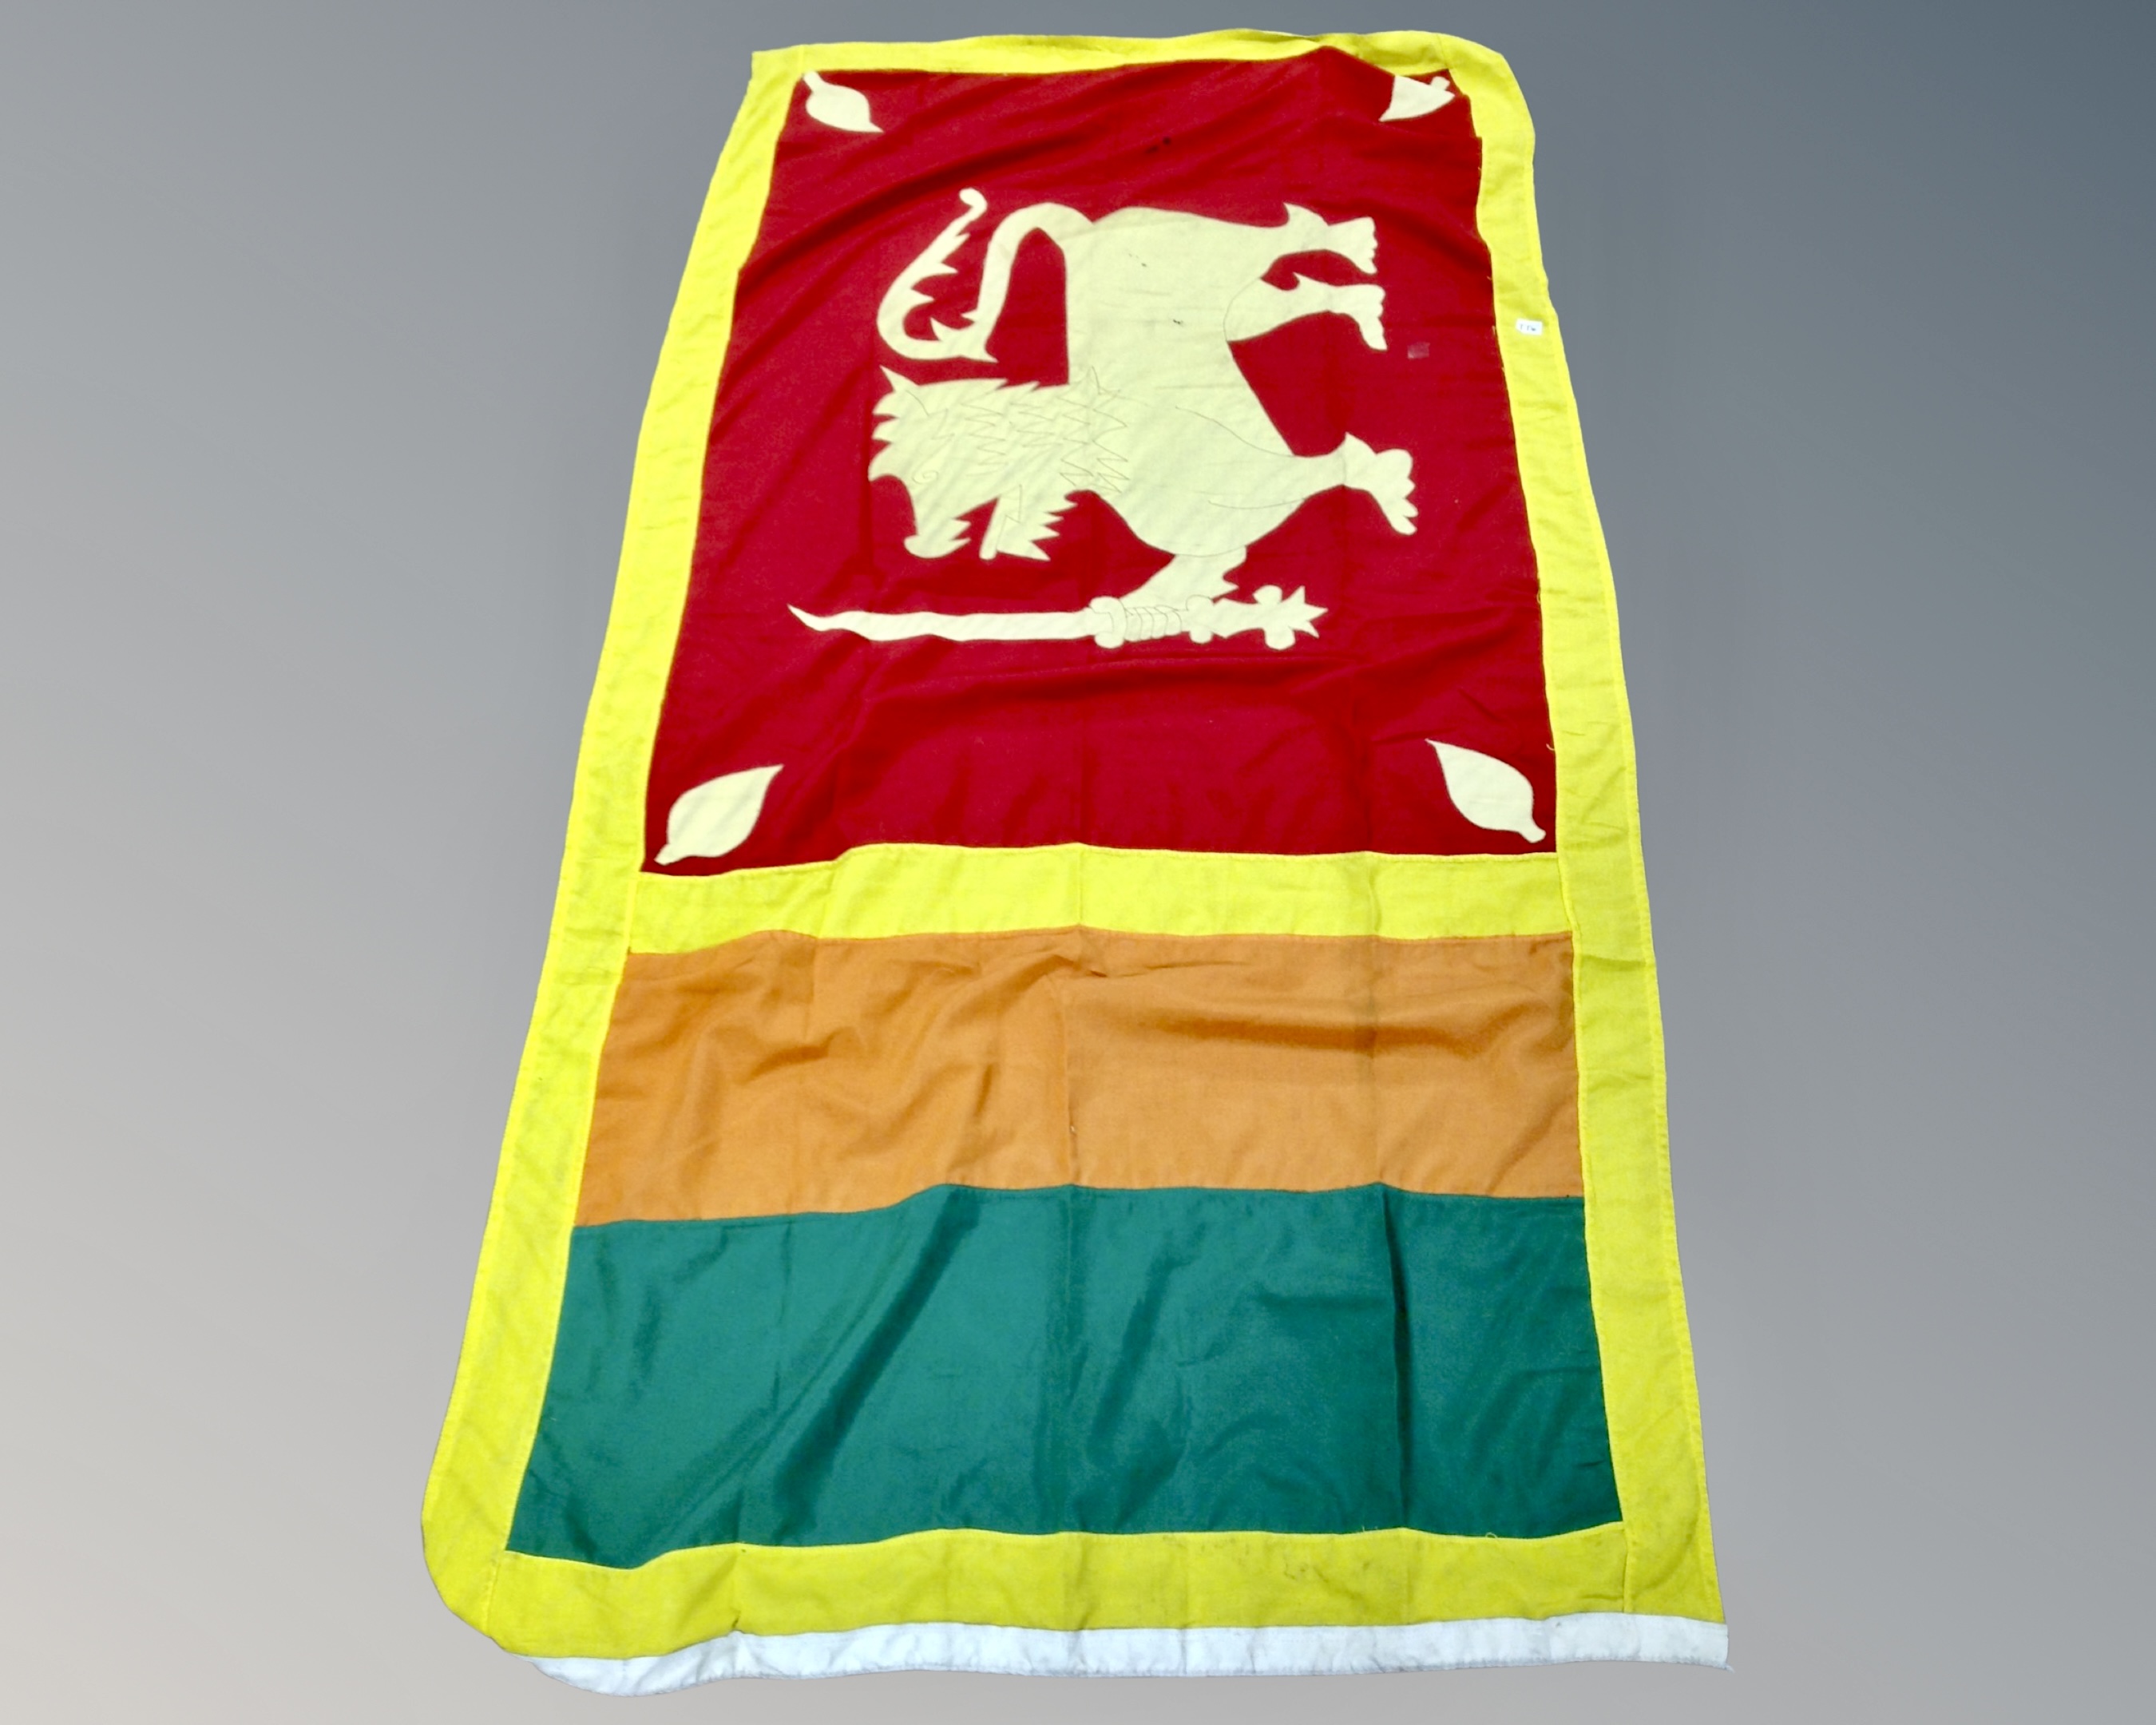 A Sri Lanka flag